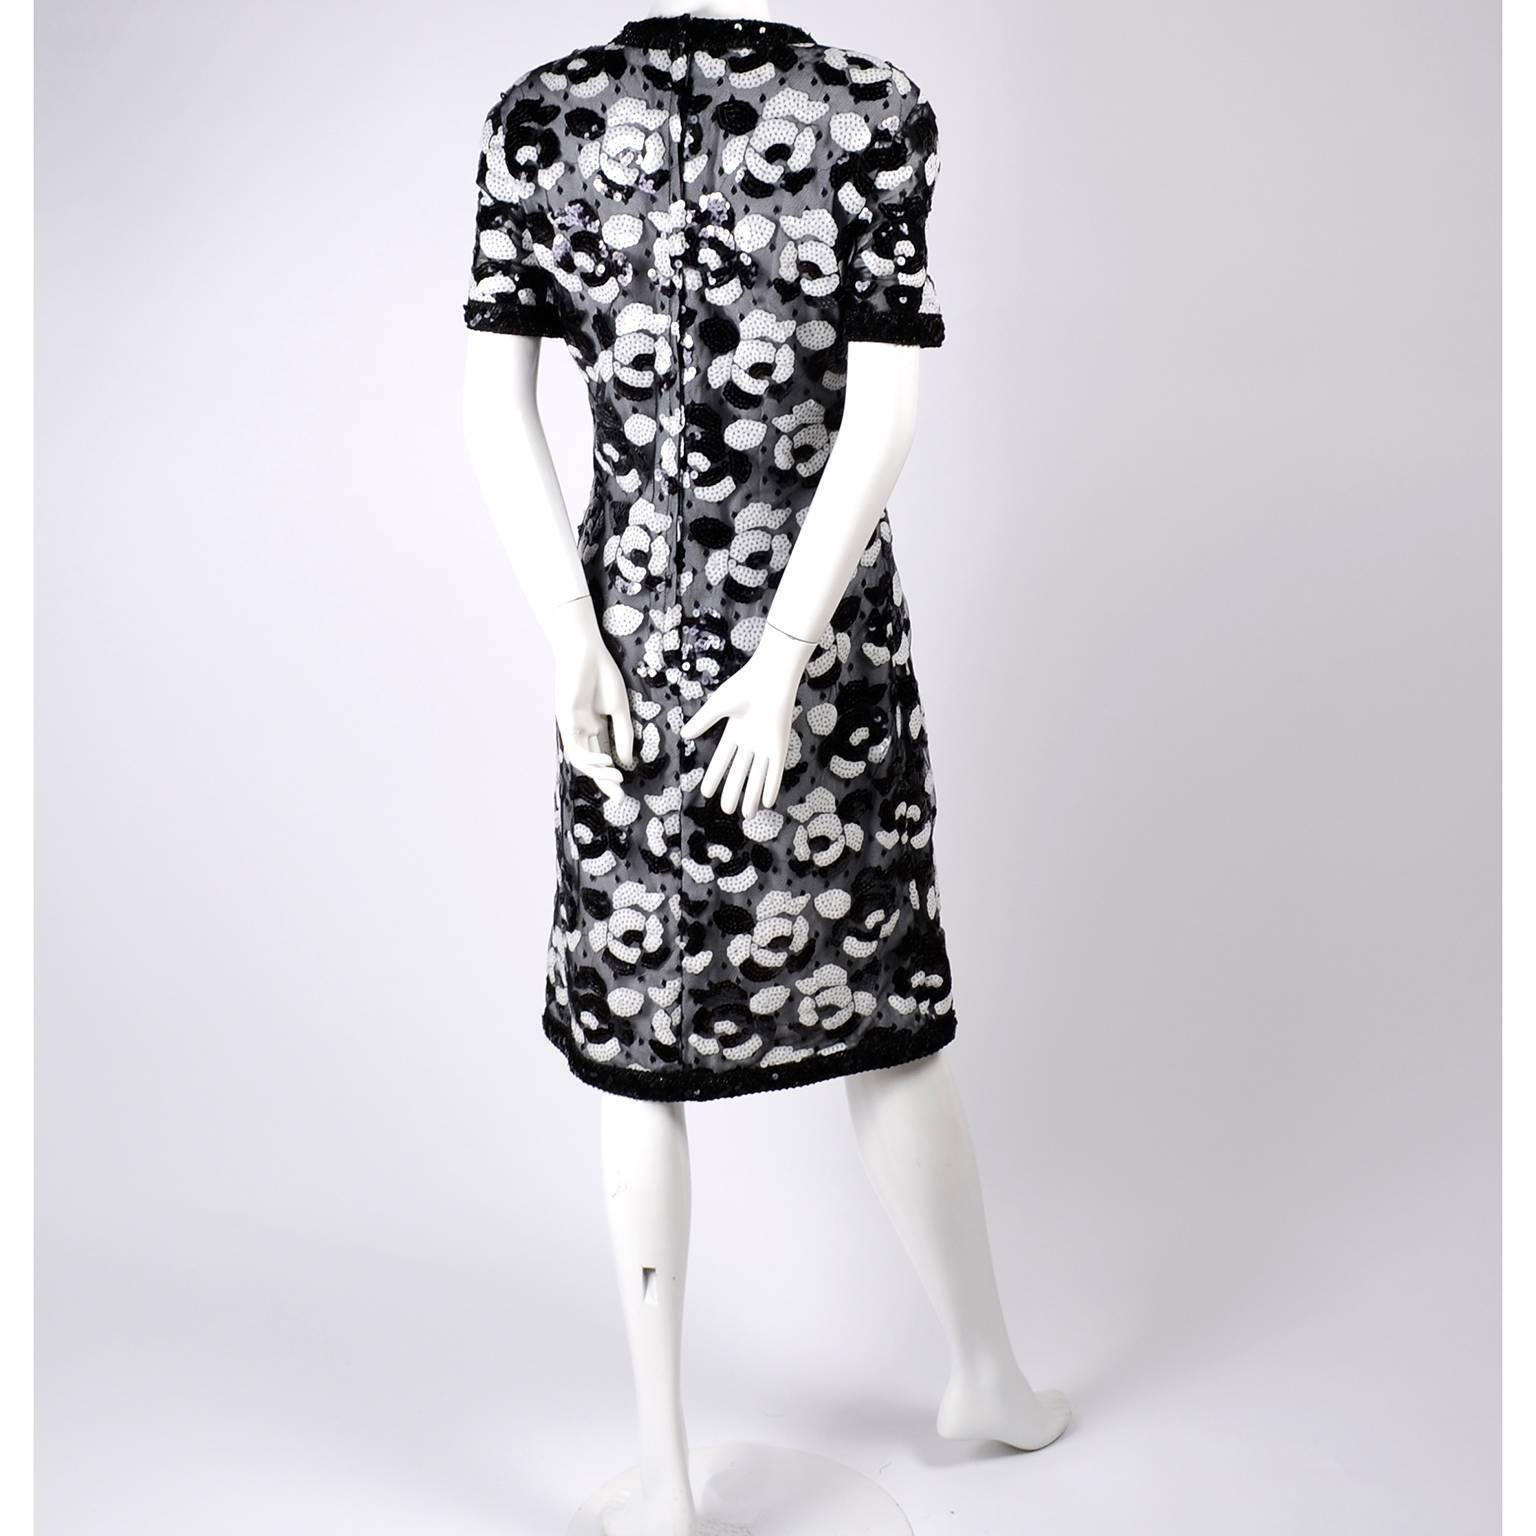 Victor Costa Vintage Dress in Black Mesh Black & White Sequins Over White Satin 1